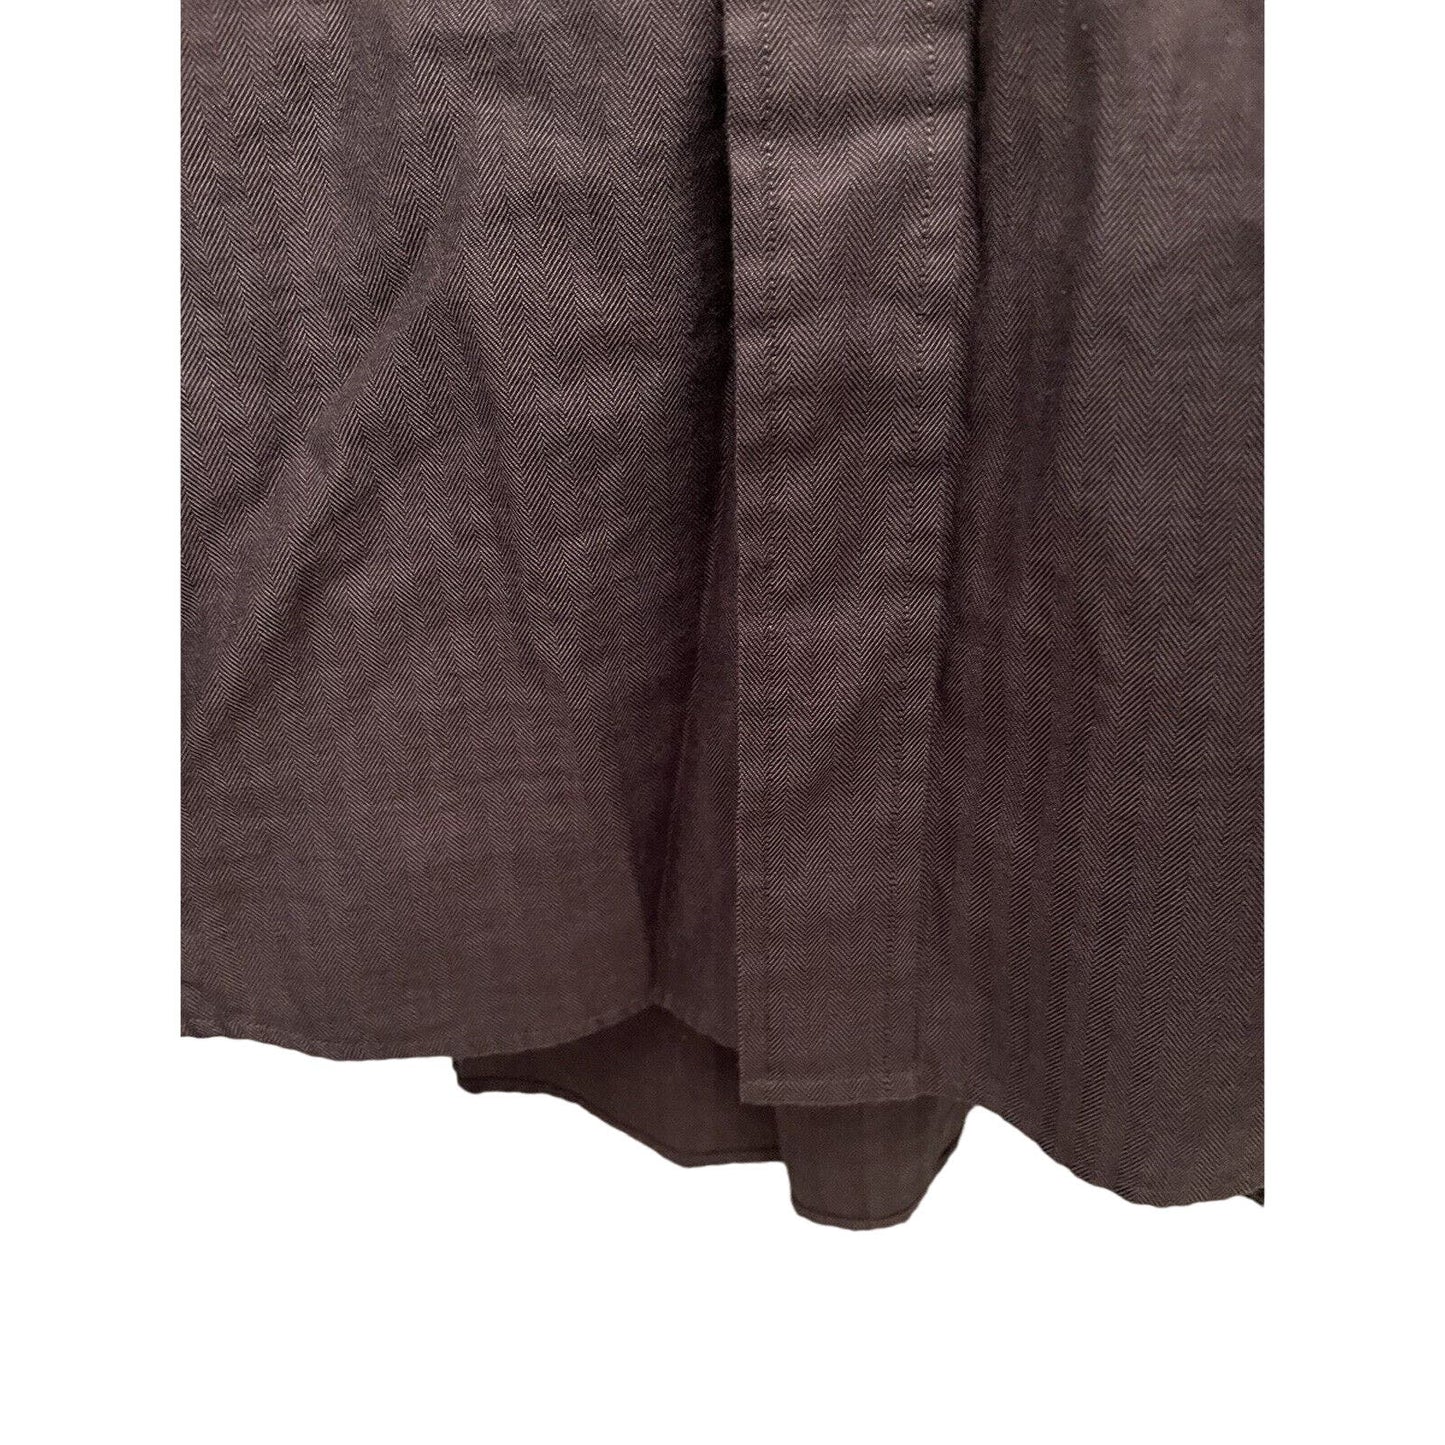 Vintage 90's Tommy Hilfiger Men's Gray/Black Button Down Shirt 17 1/2